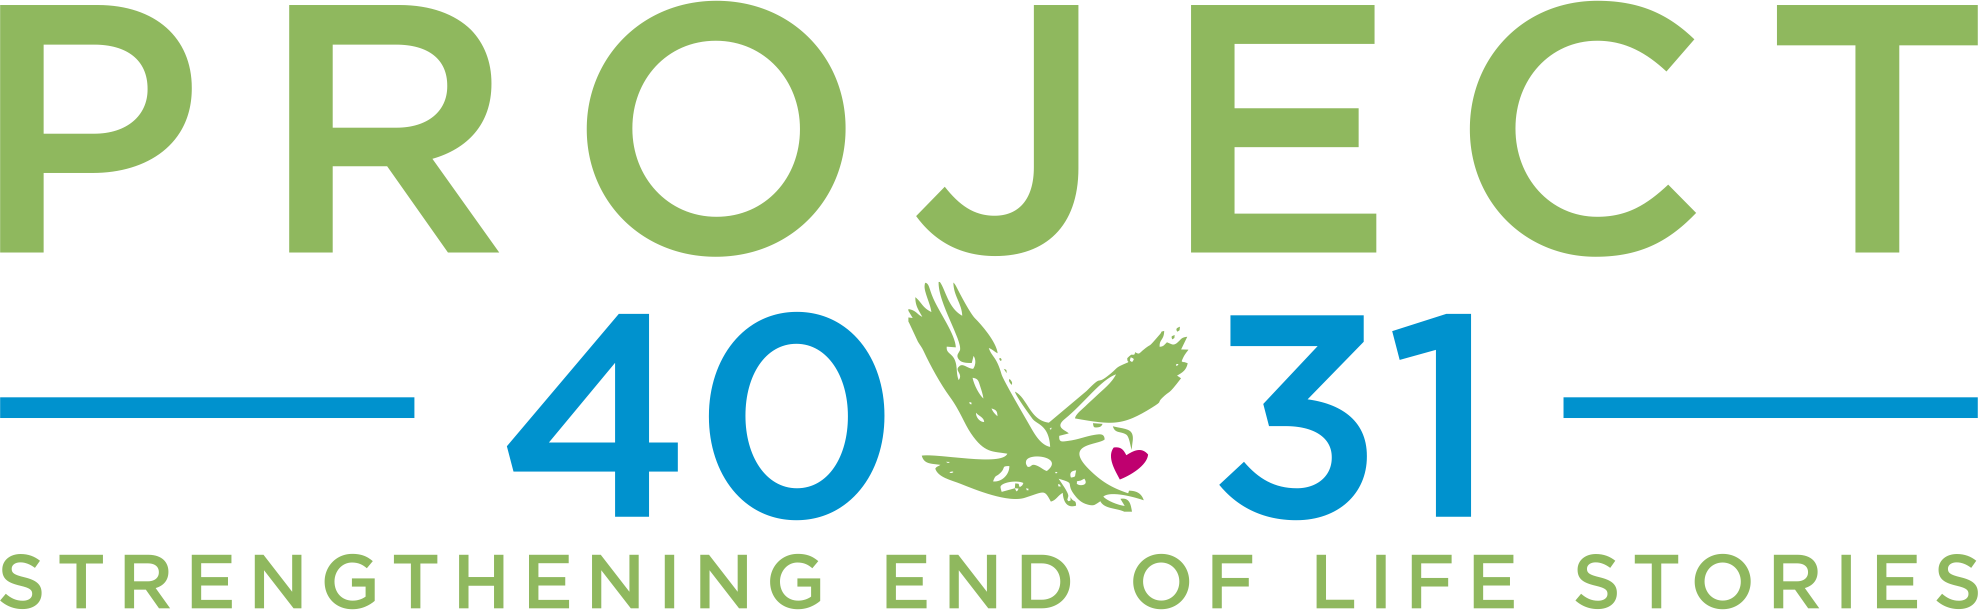 Project 4031 logo